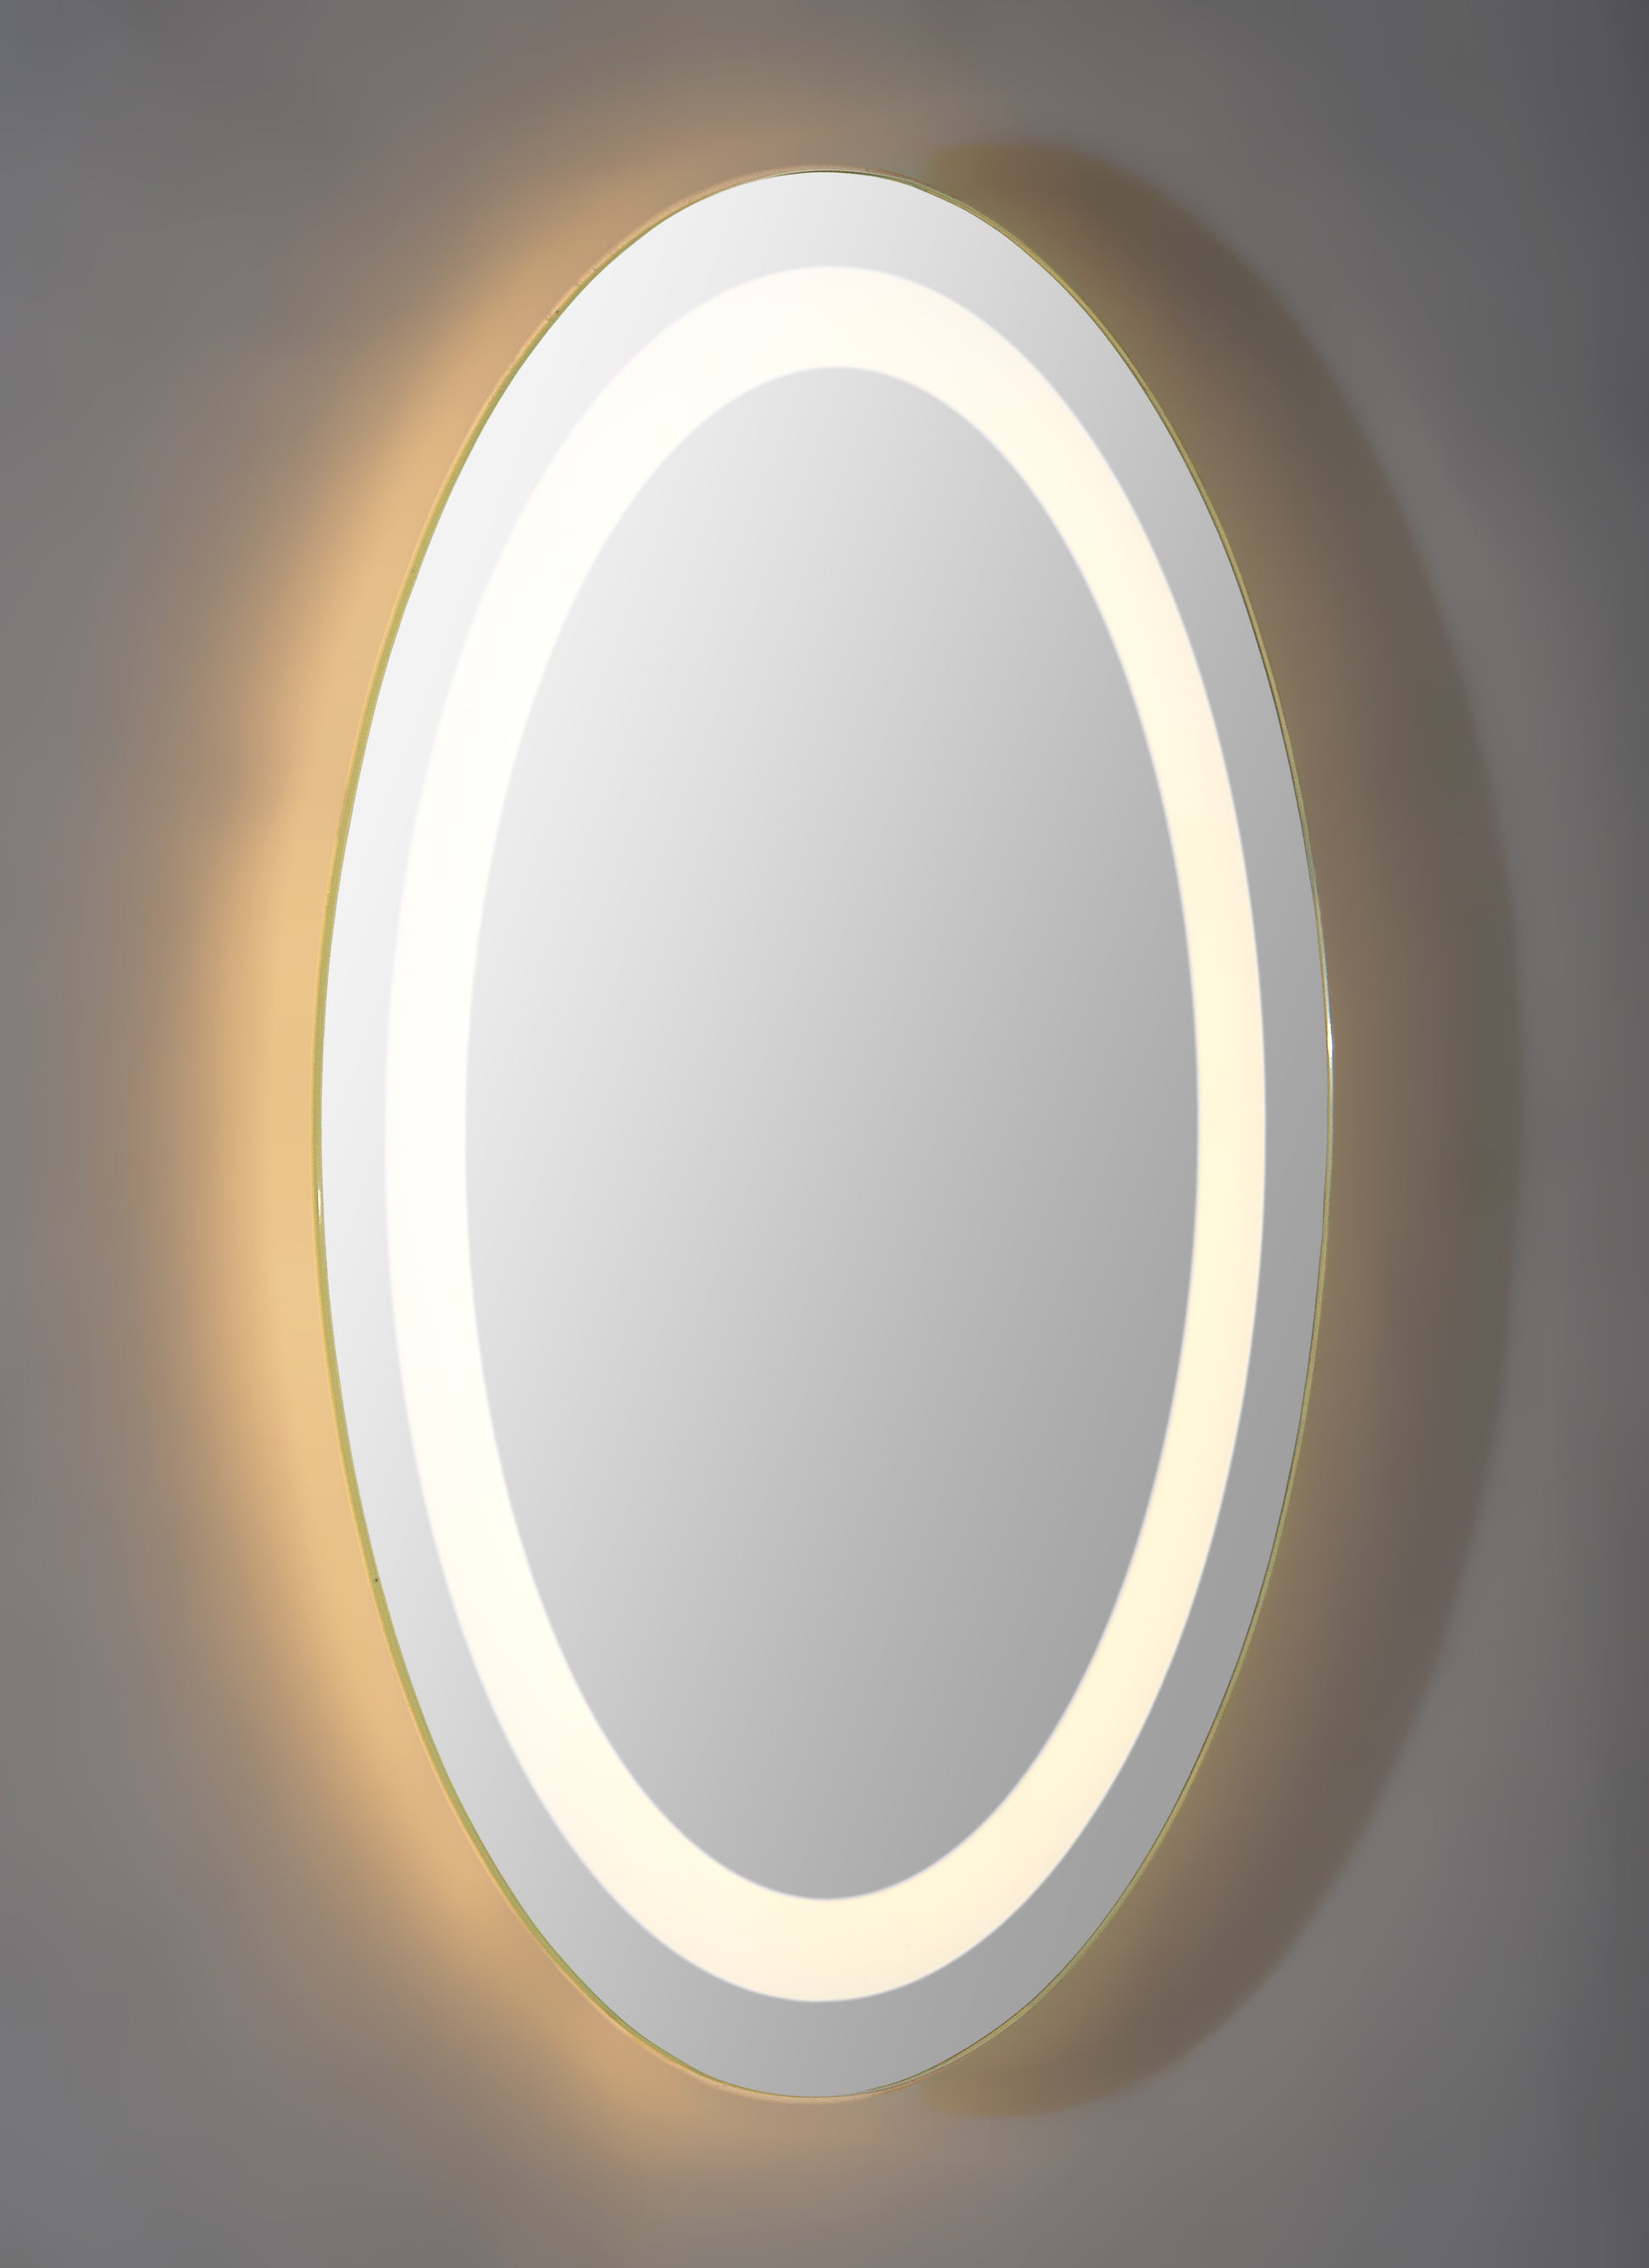 Oval shaped frame less back lit mirror.